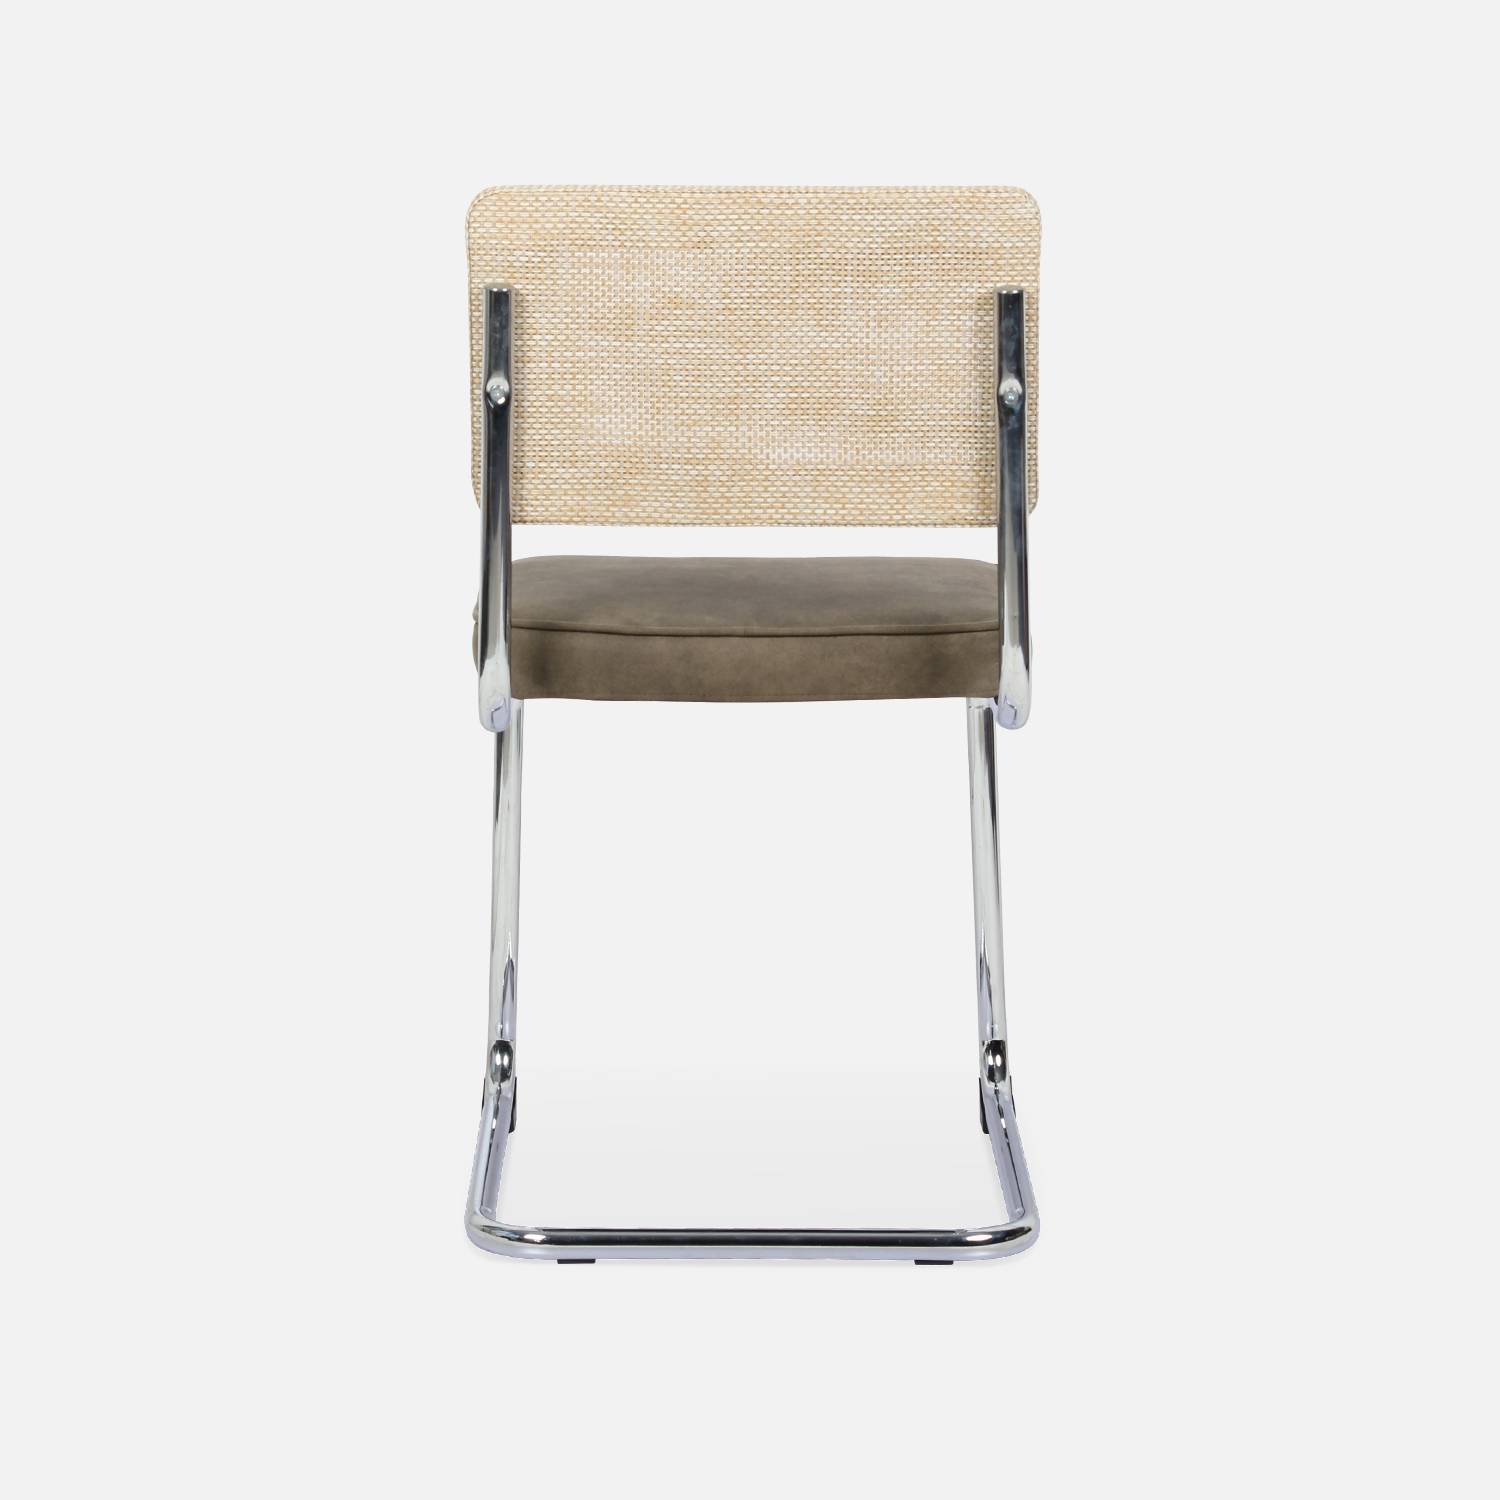 2 chaises cantilever - Maja - tissu kaki et résine effet rotin, 46 x 54,5 x 84,5cm   Photo7